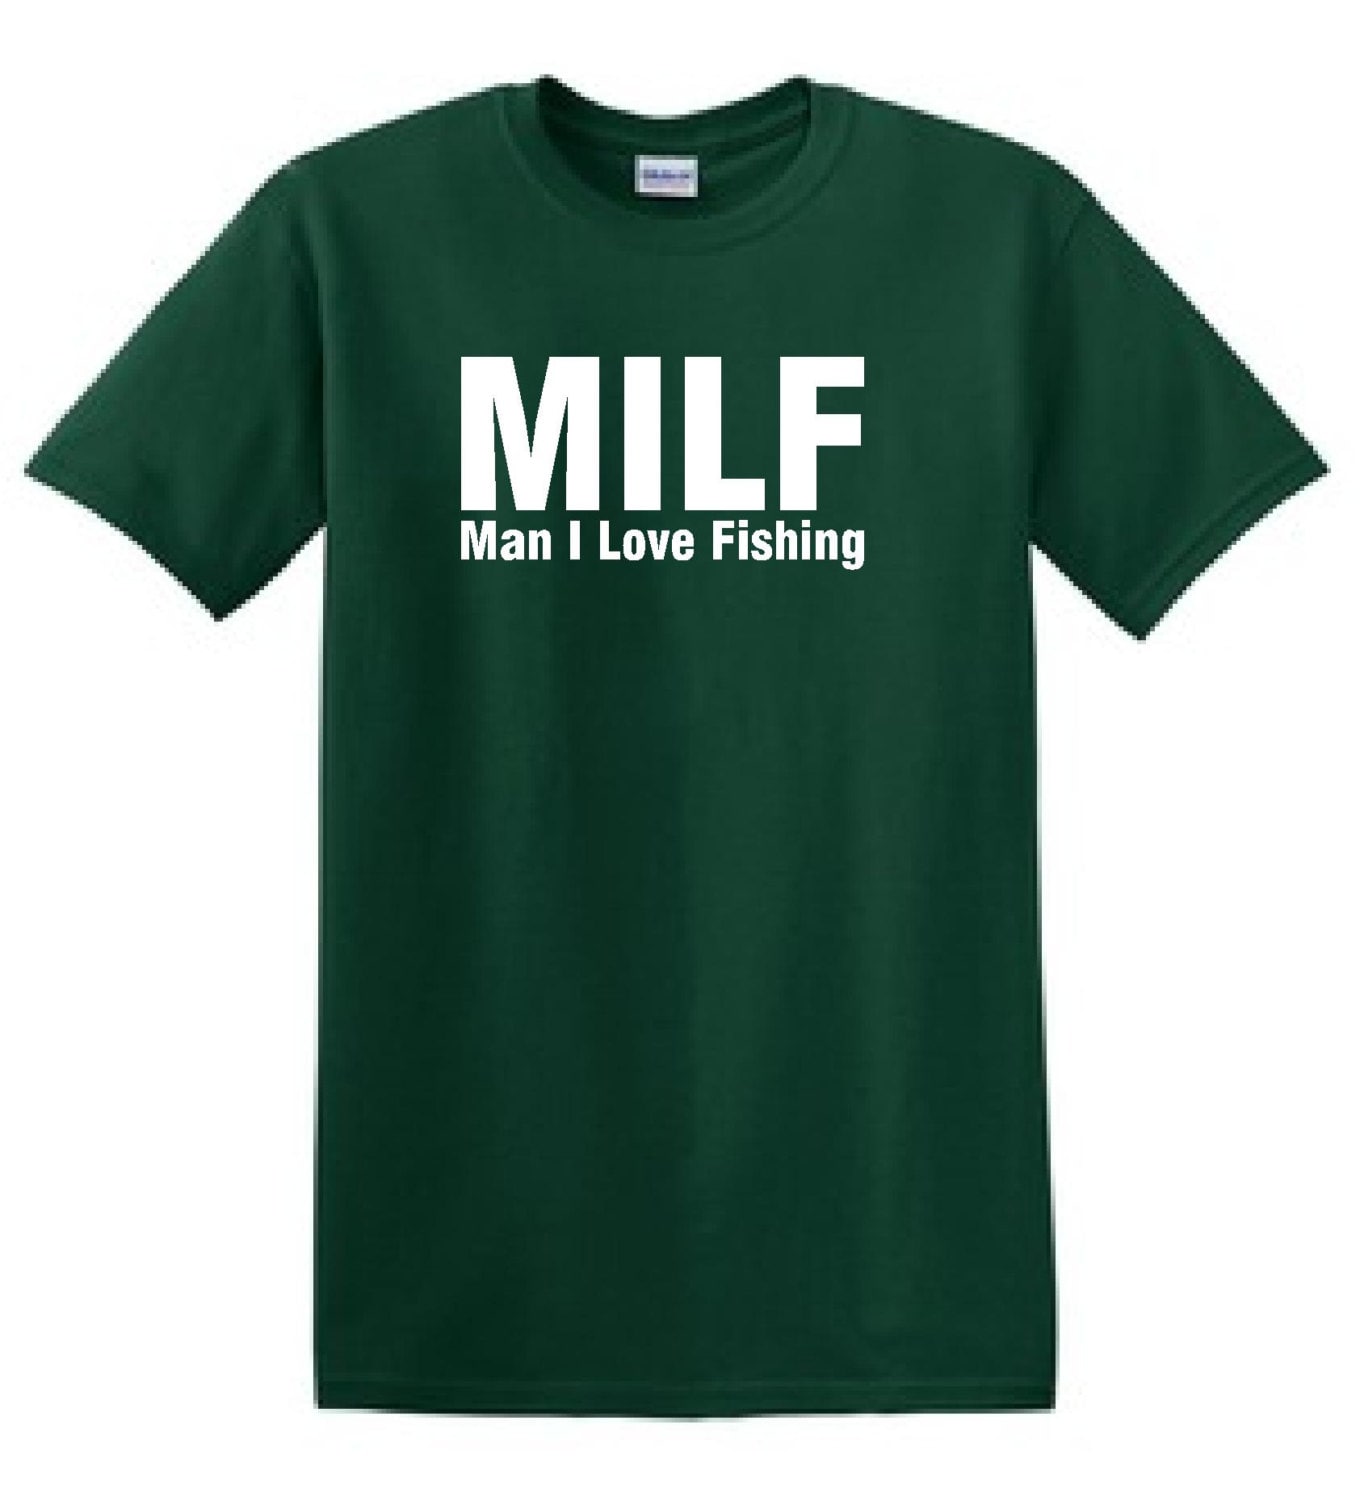 Buy MILF Man I Love Fishing Funny T-shirt Online in India 